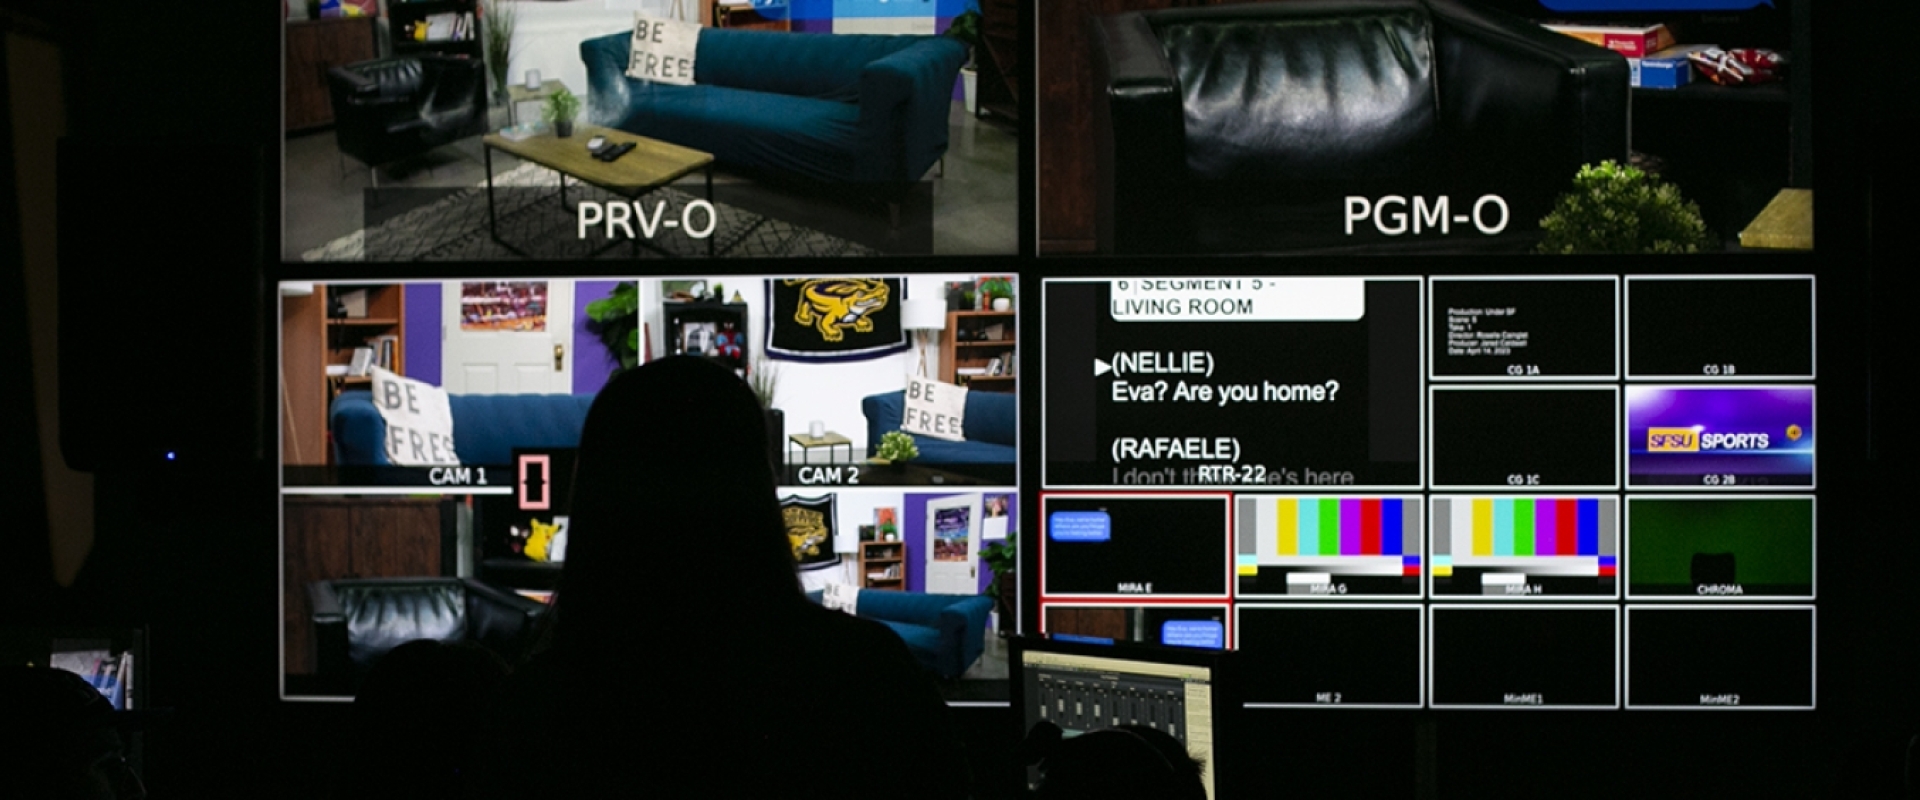 BECA news studio with TV monitors